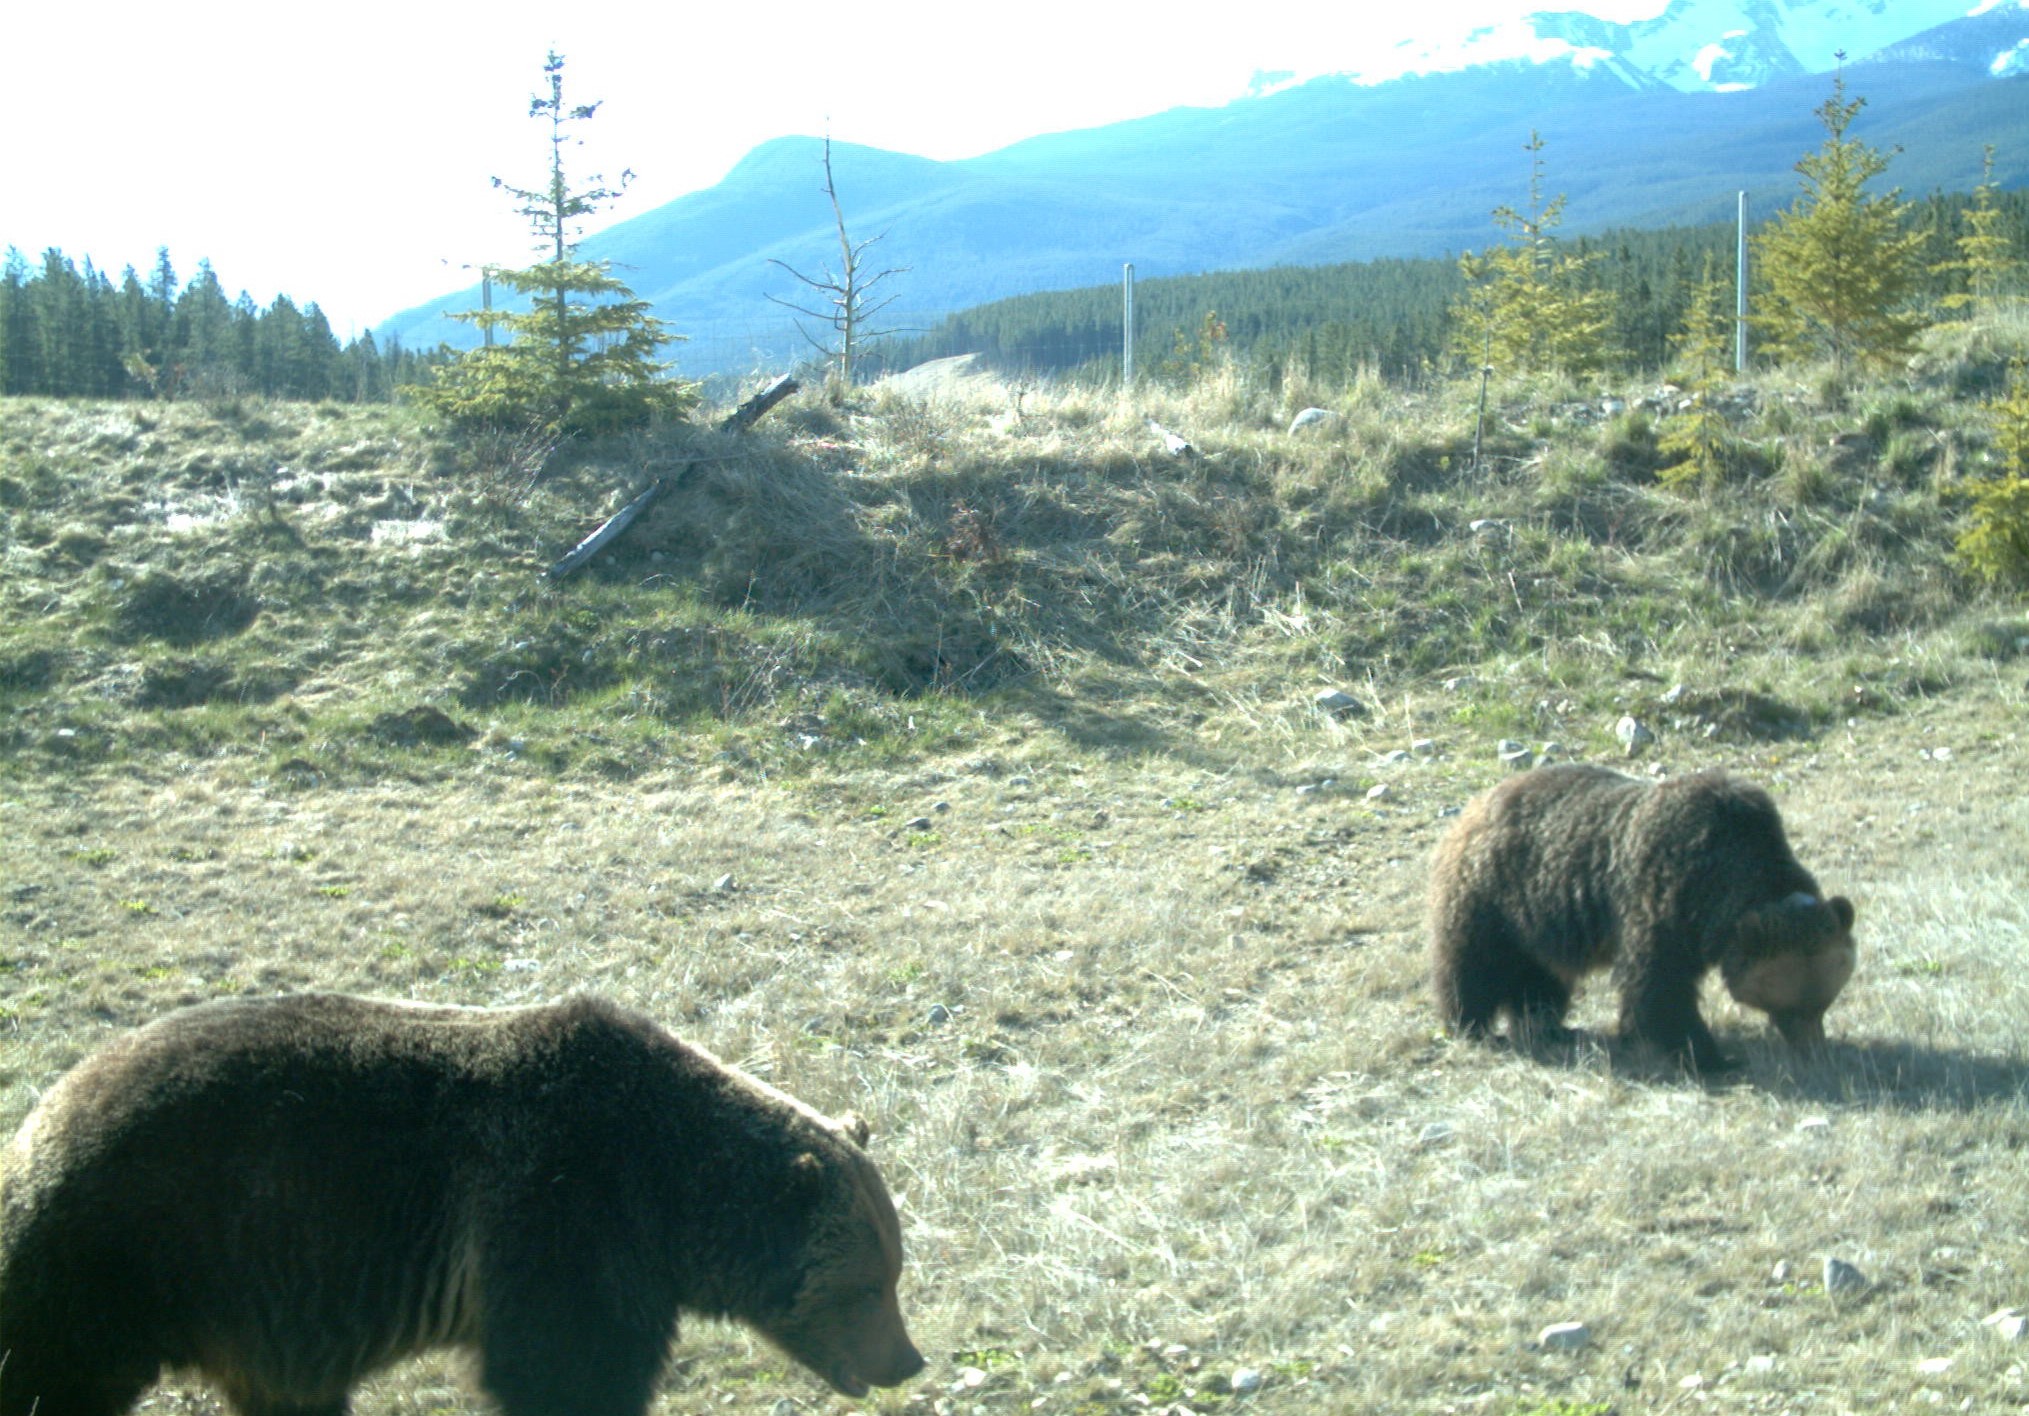 Two grizzly bears graze in a grassy field.